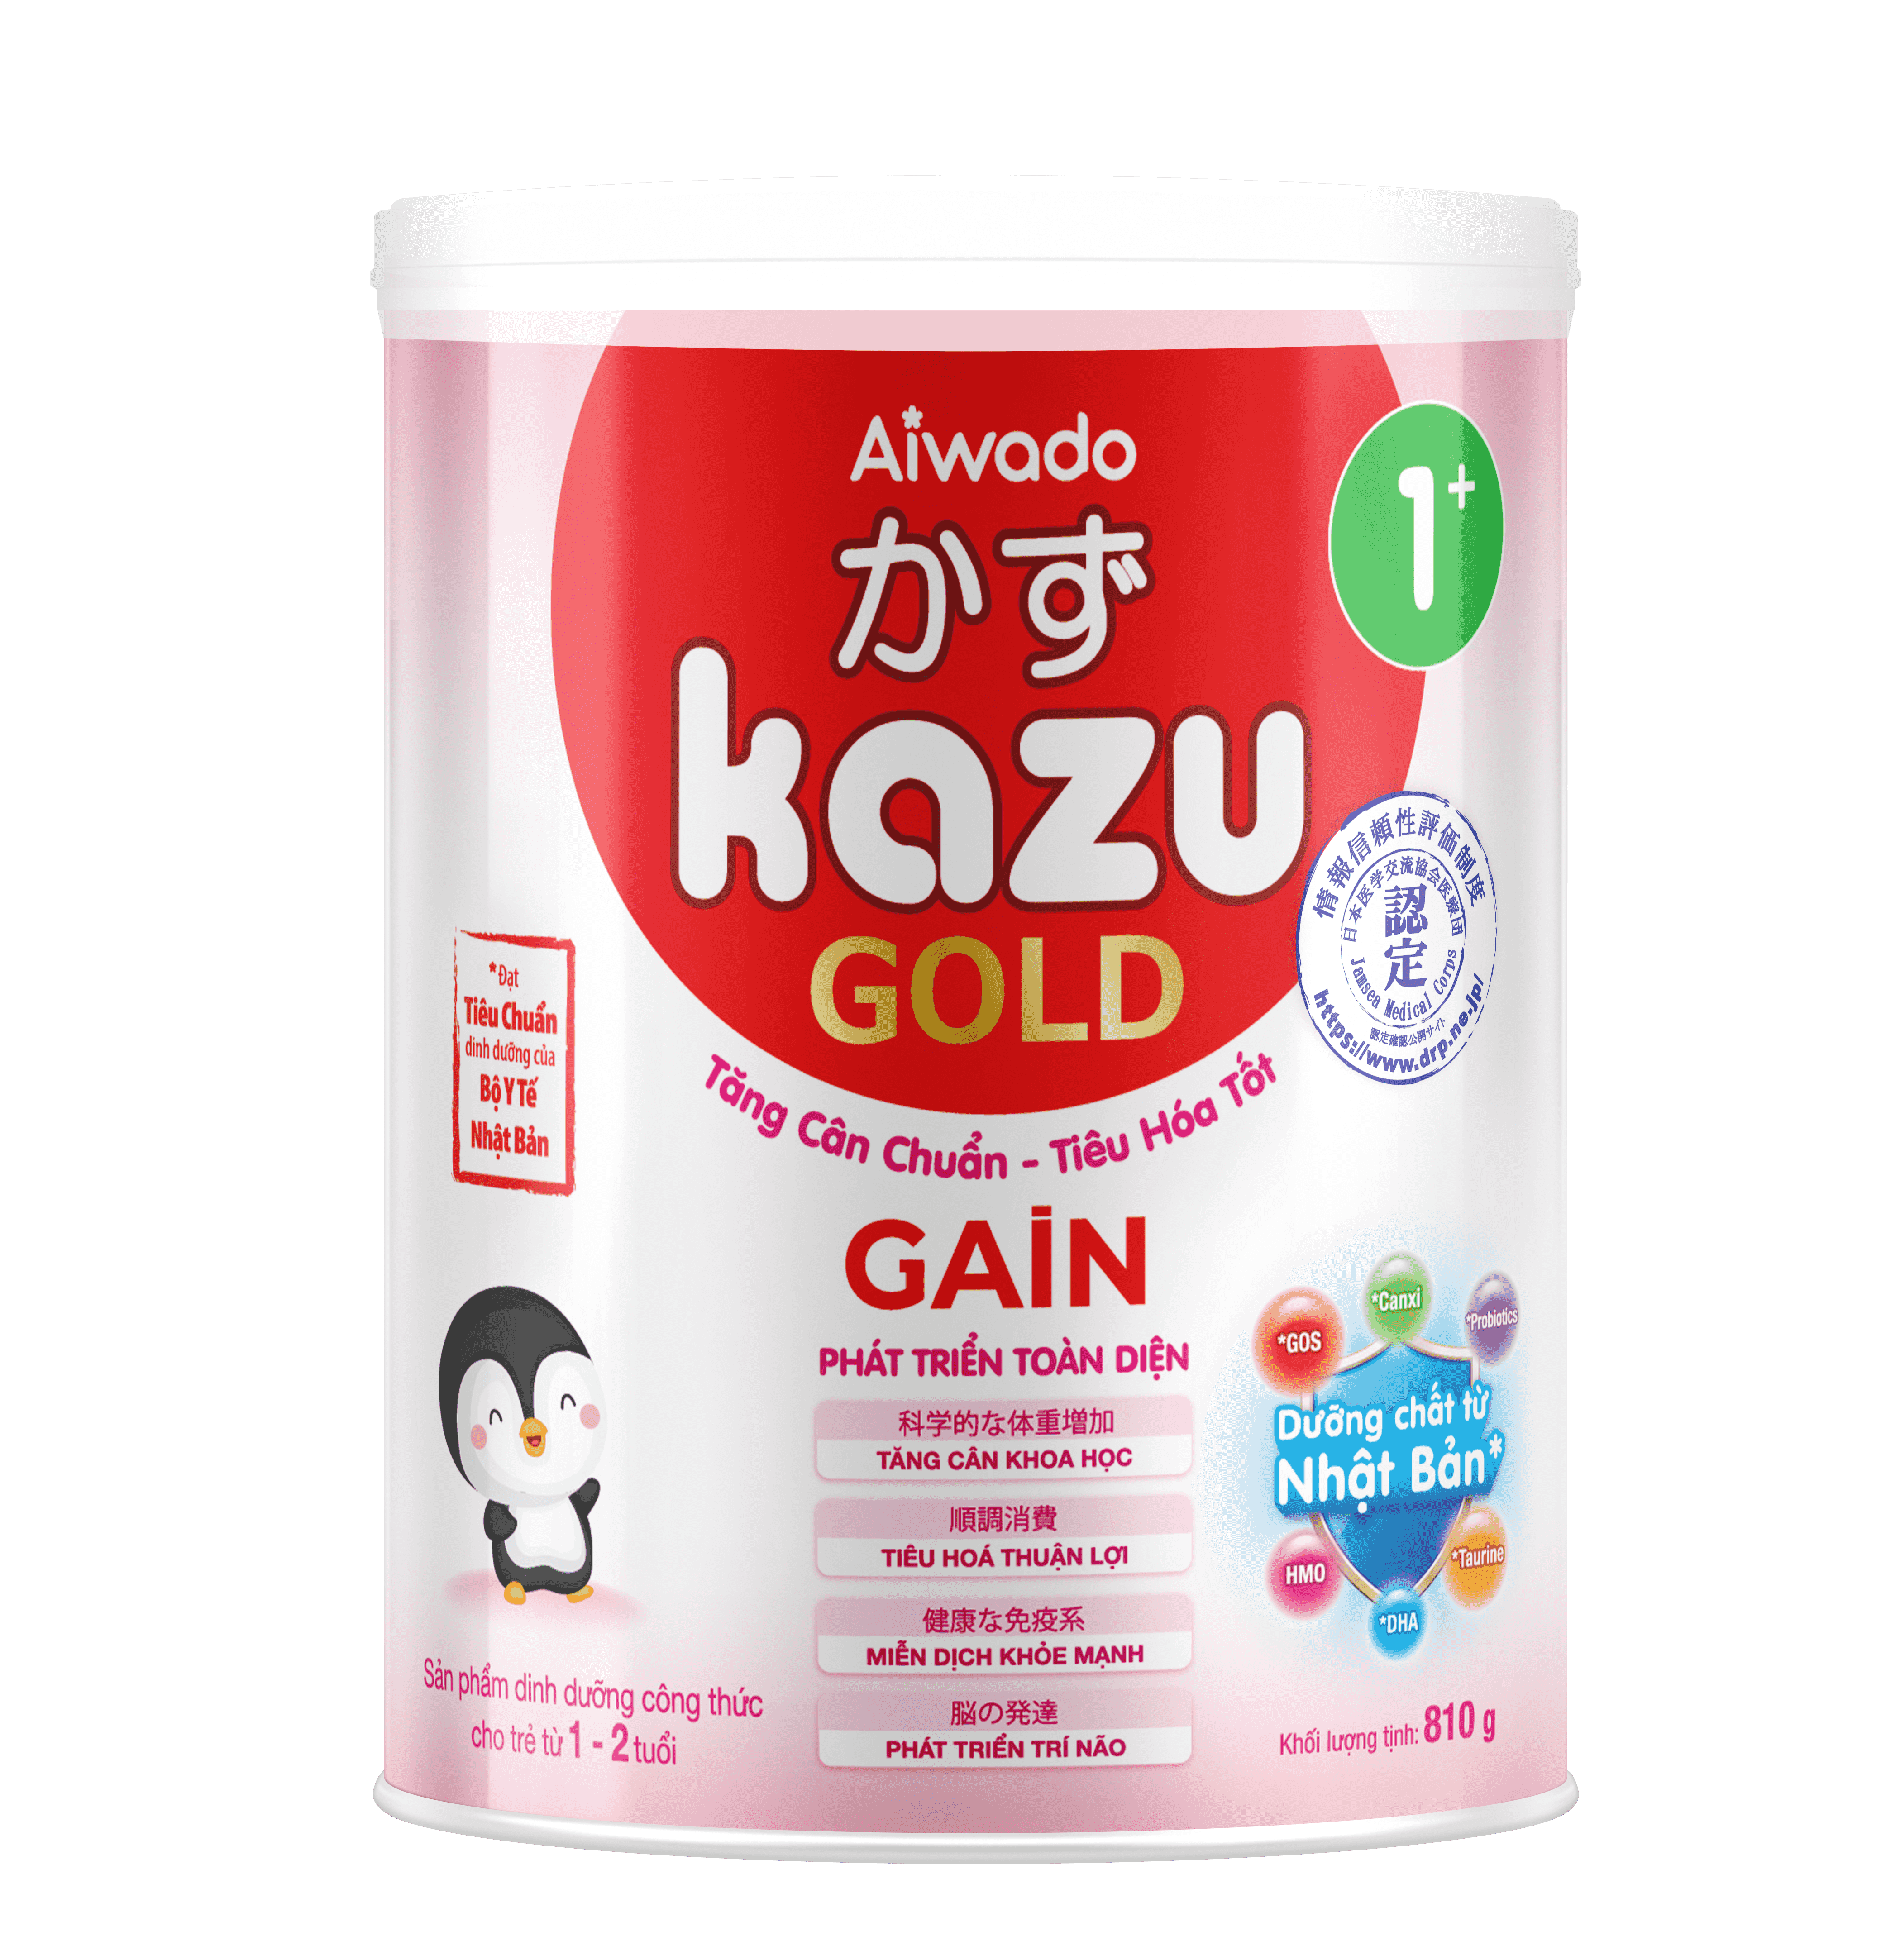 sữa bột aiwado kazu gain gold 1+ 810g 12 - 24 tháng 2